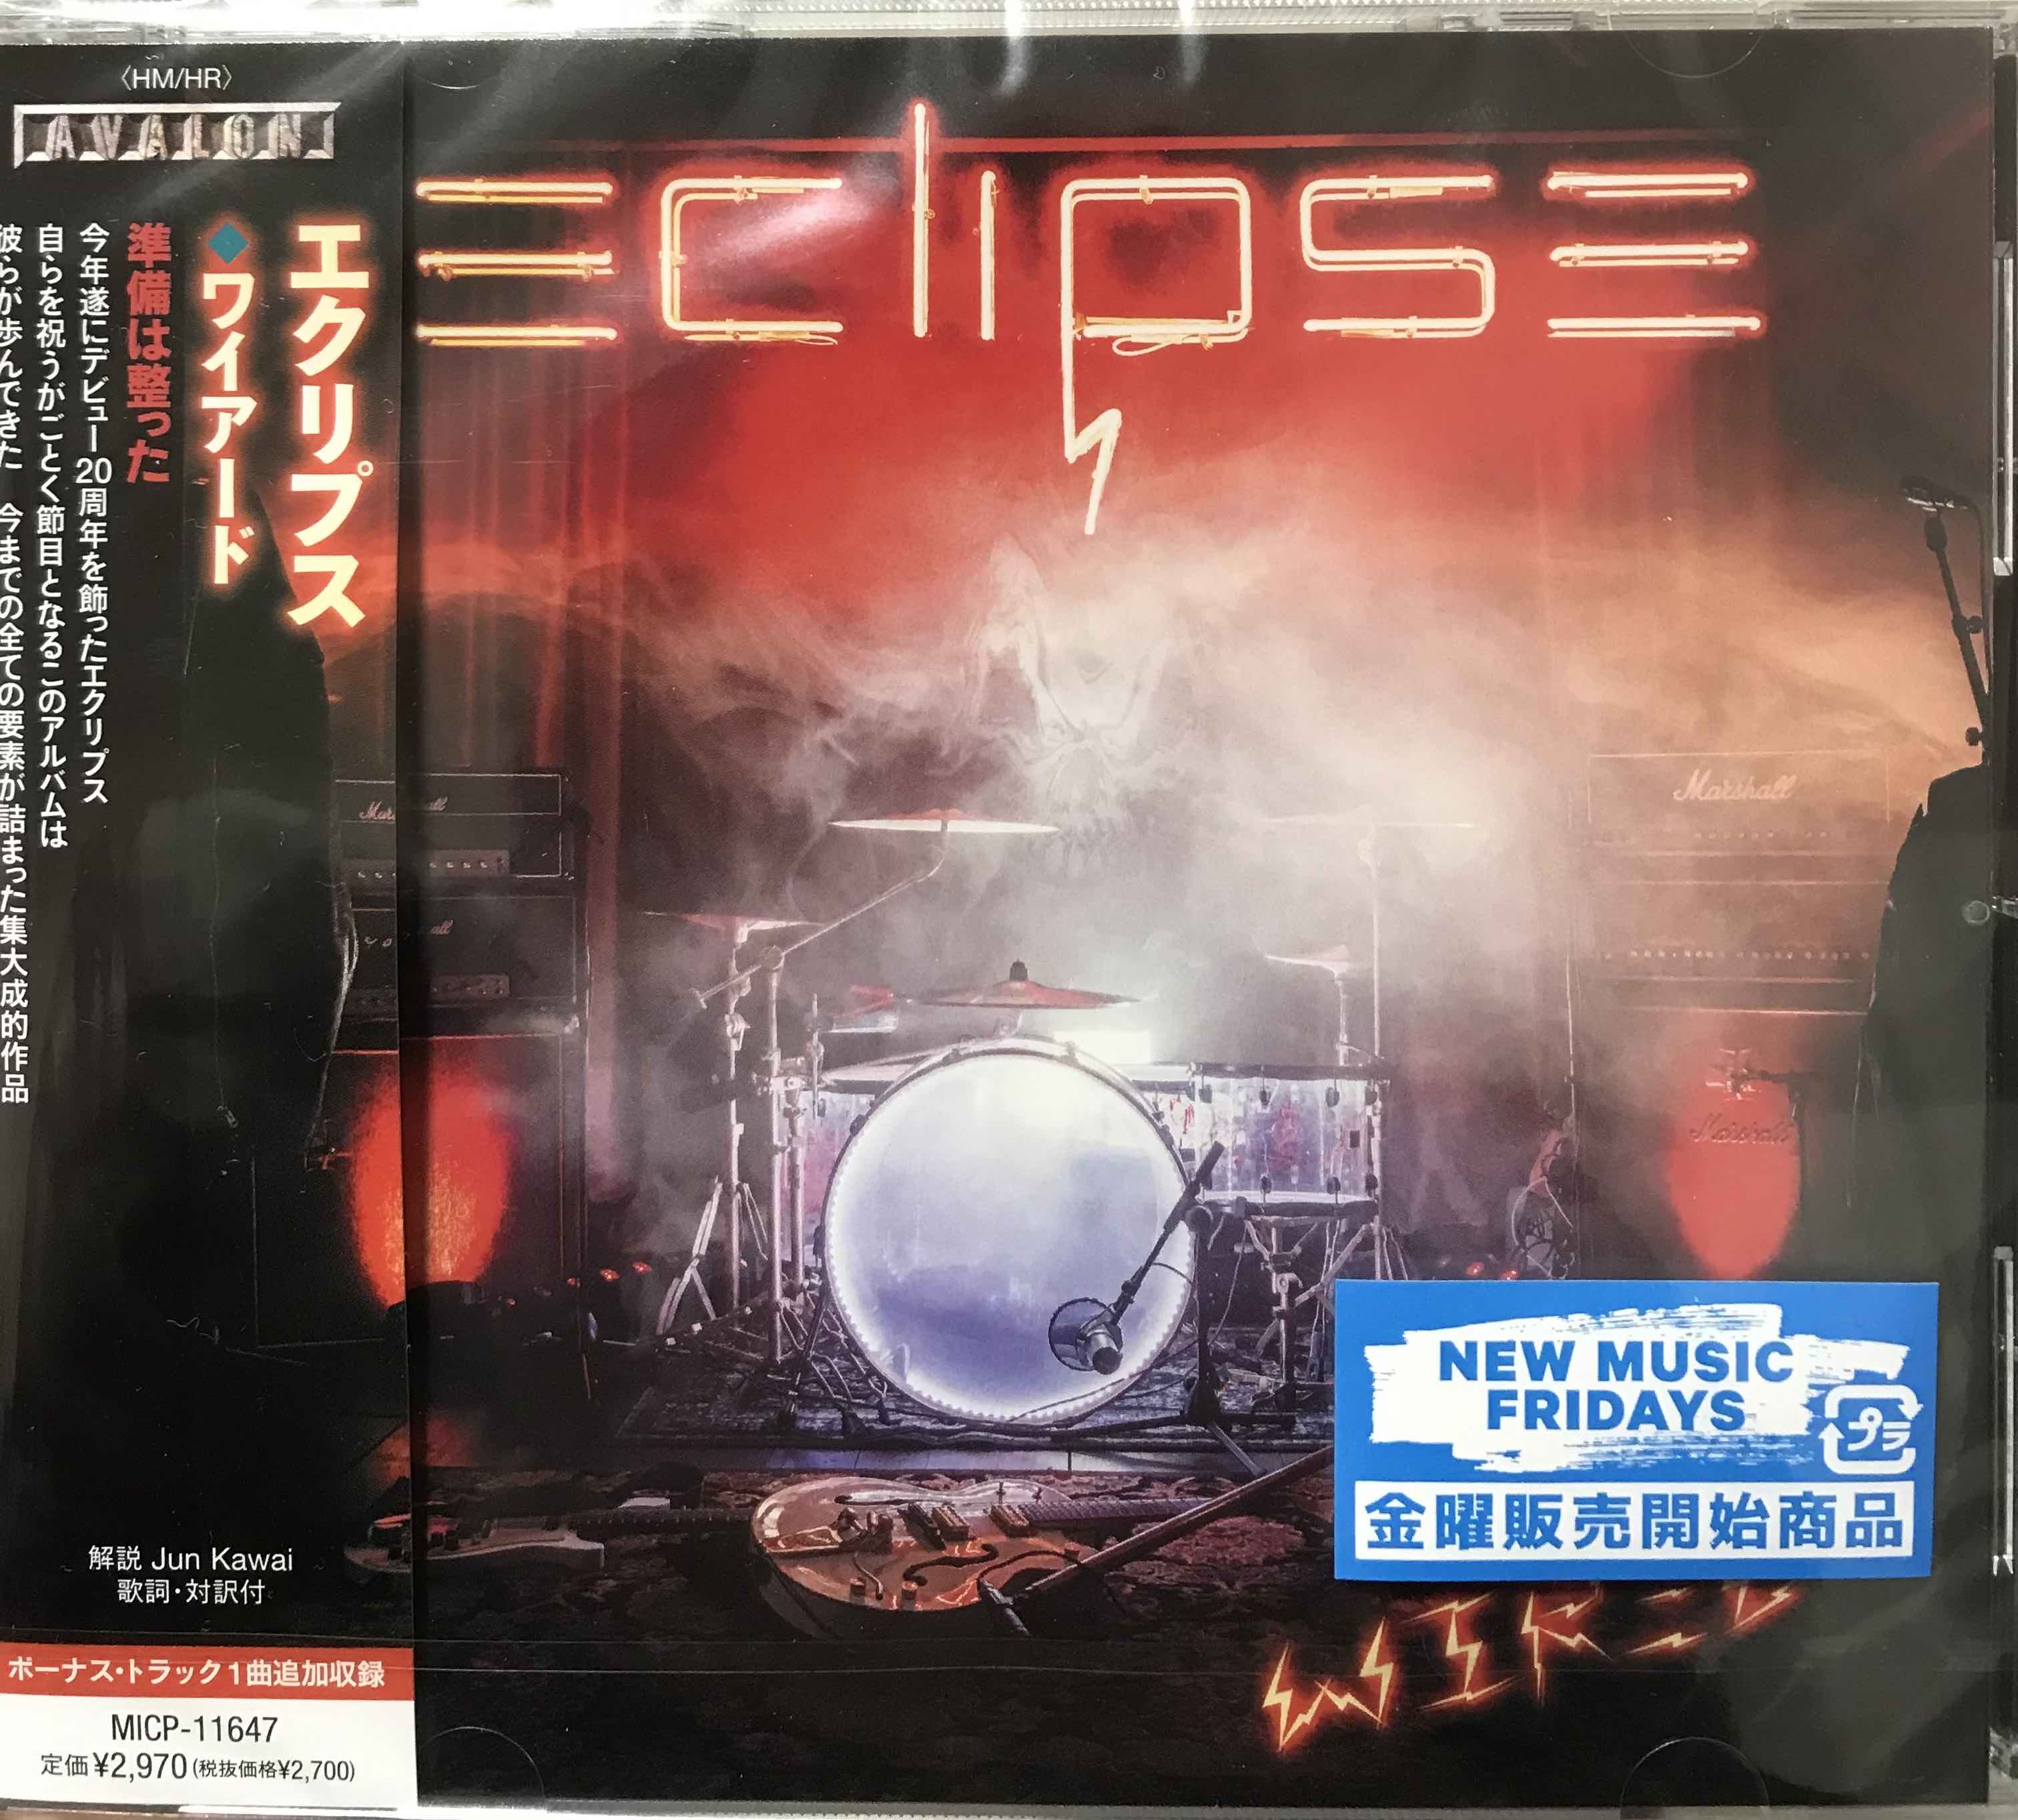 Eclipse ‎– Wired